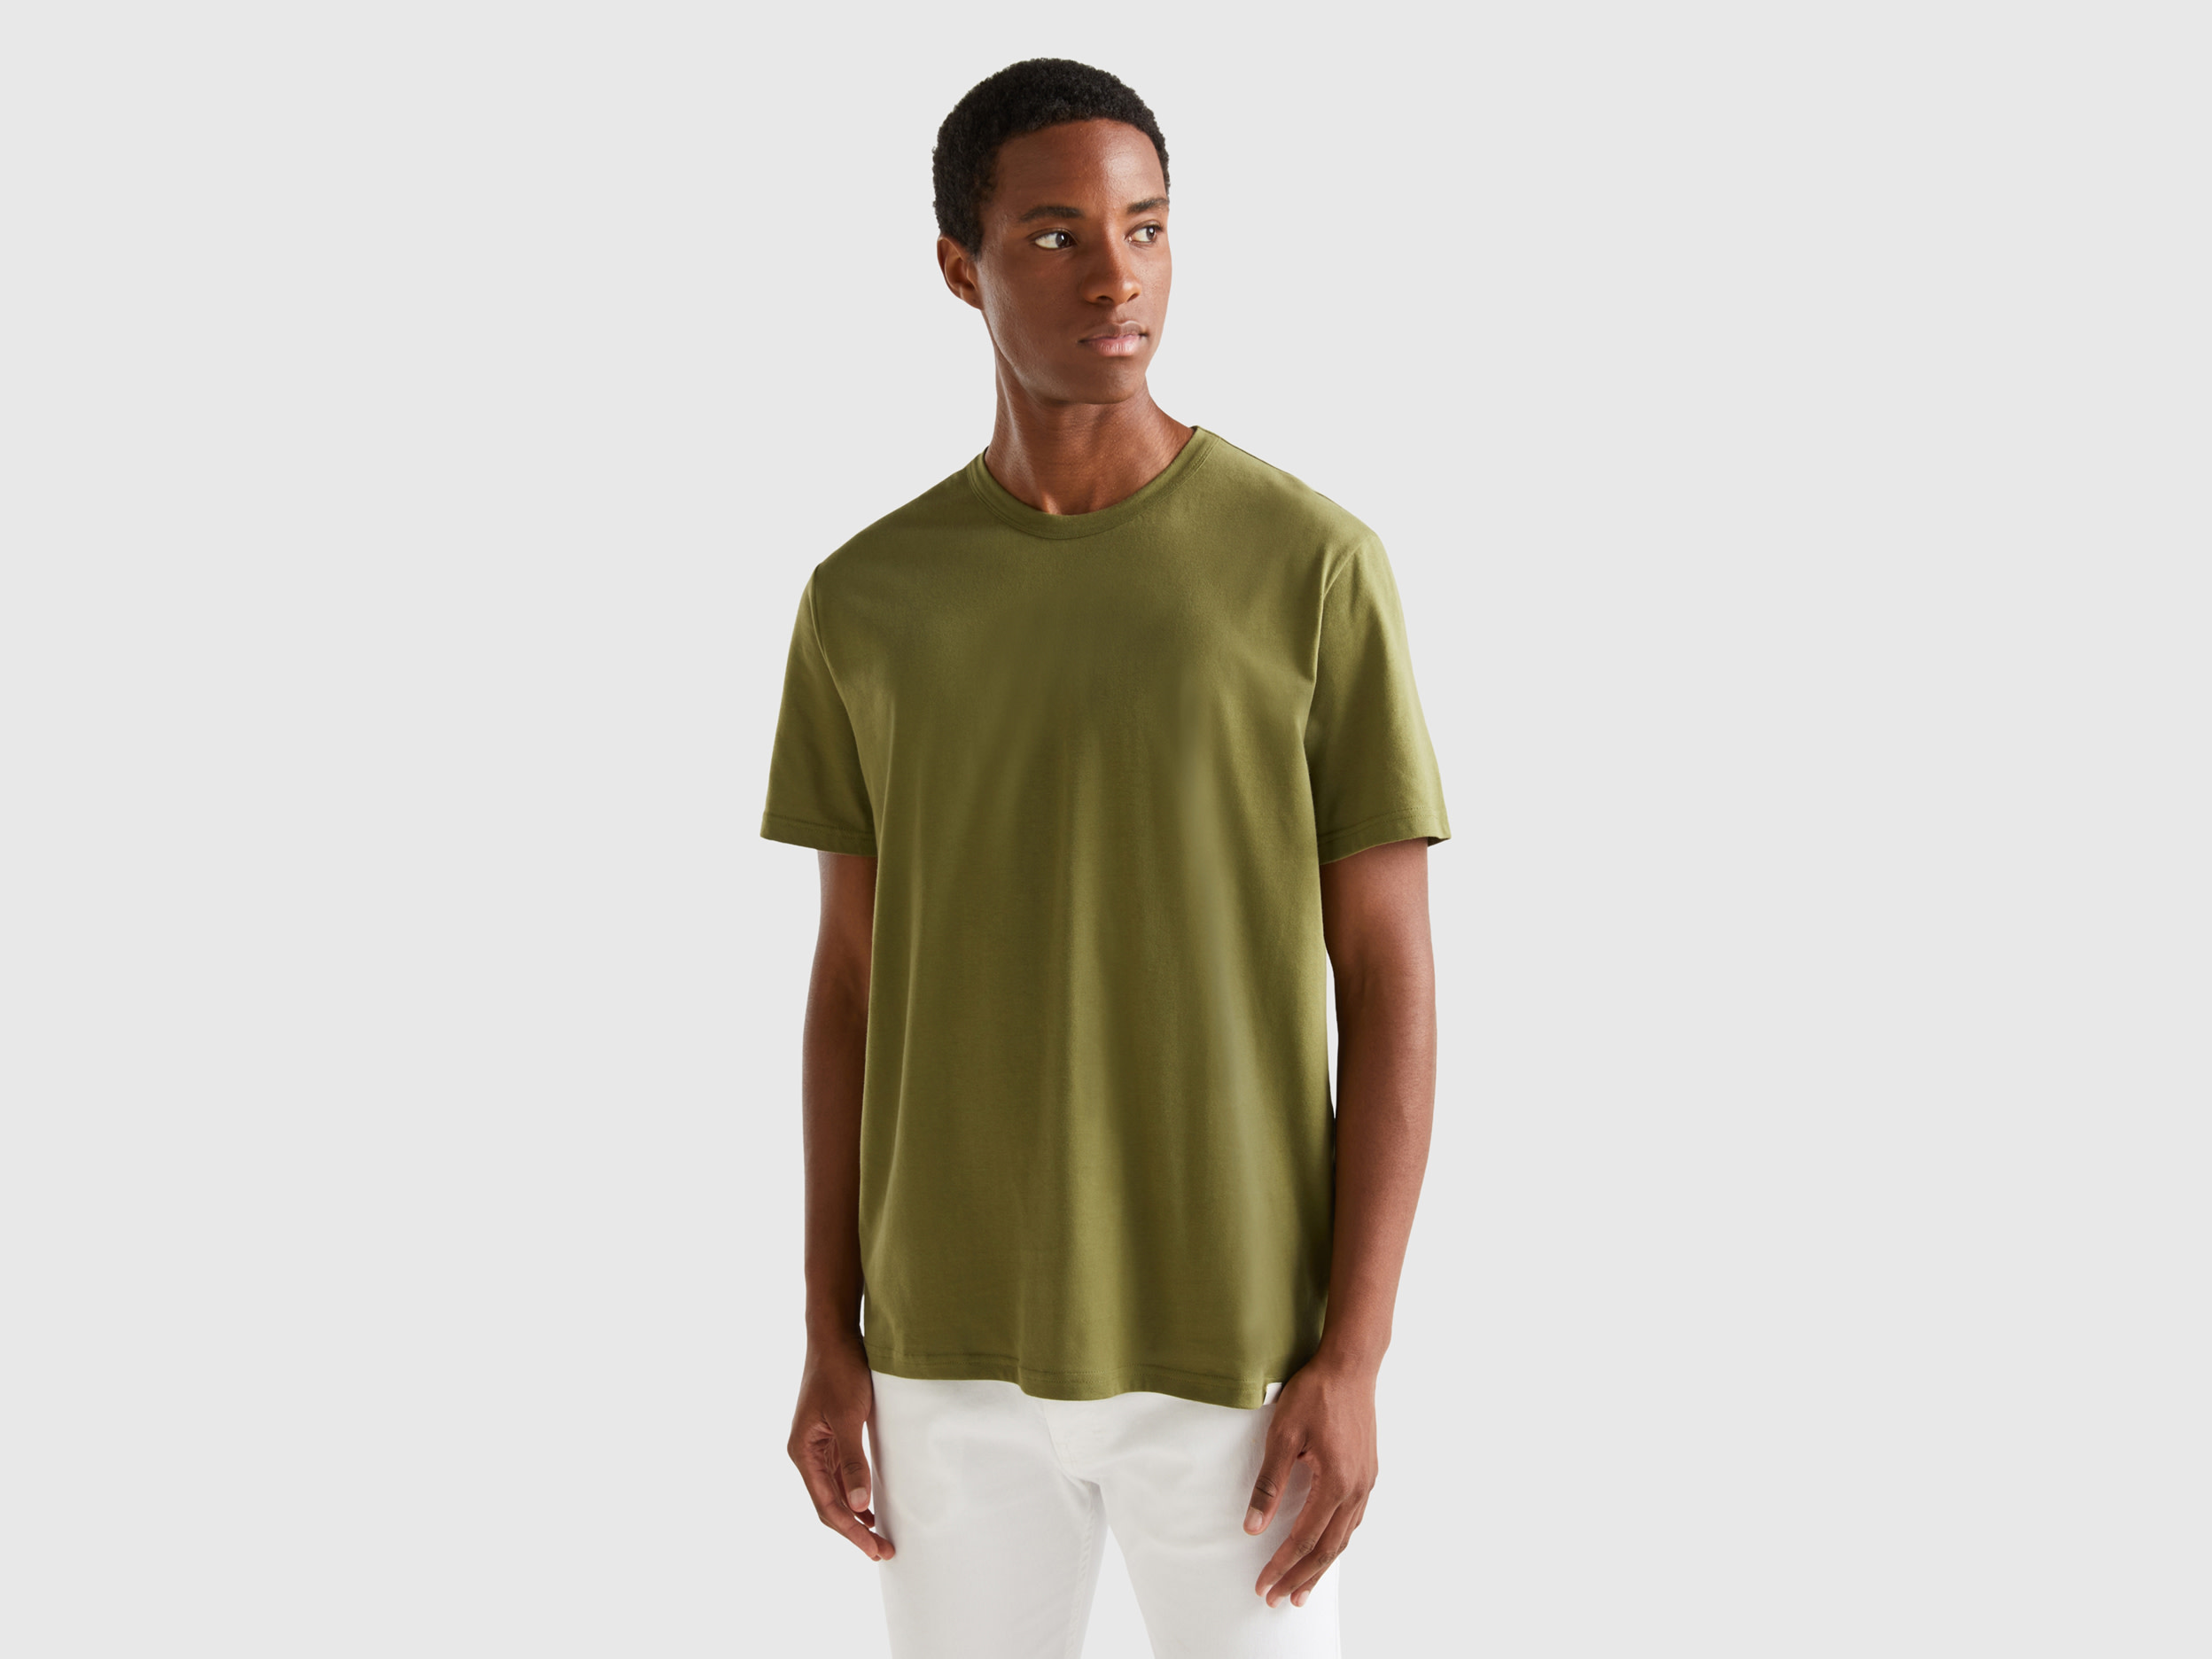 Benetton, T-shirt In Warm Cotton, size S, Military Green, Men